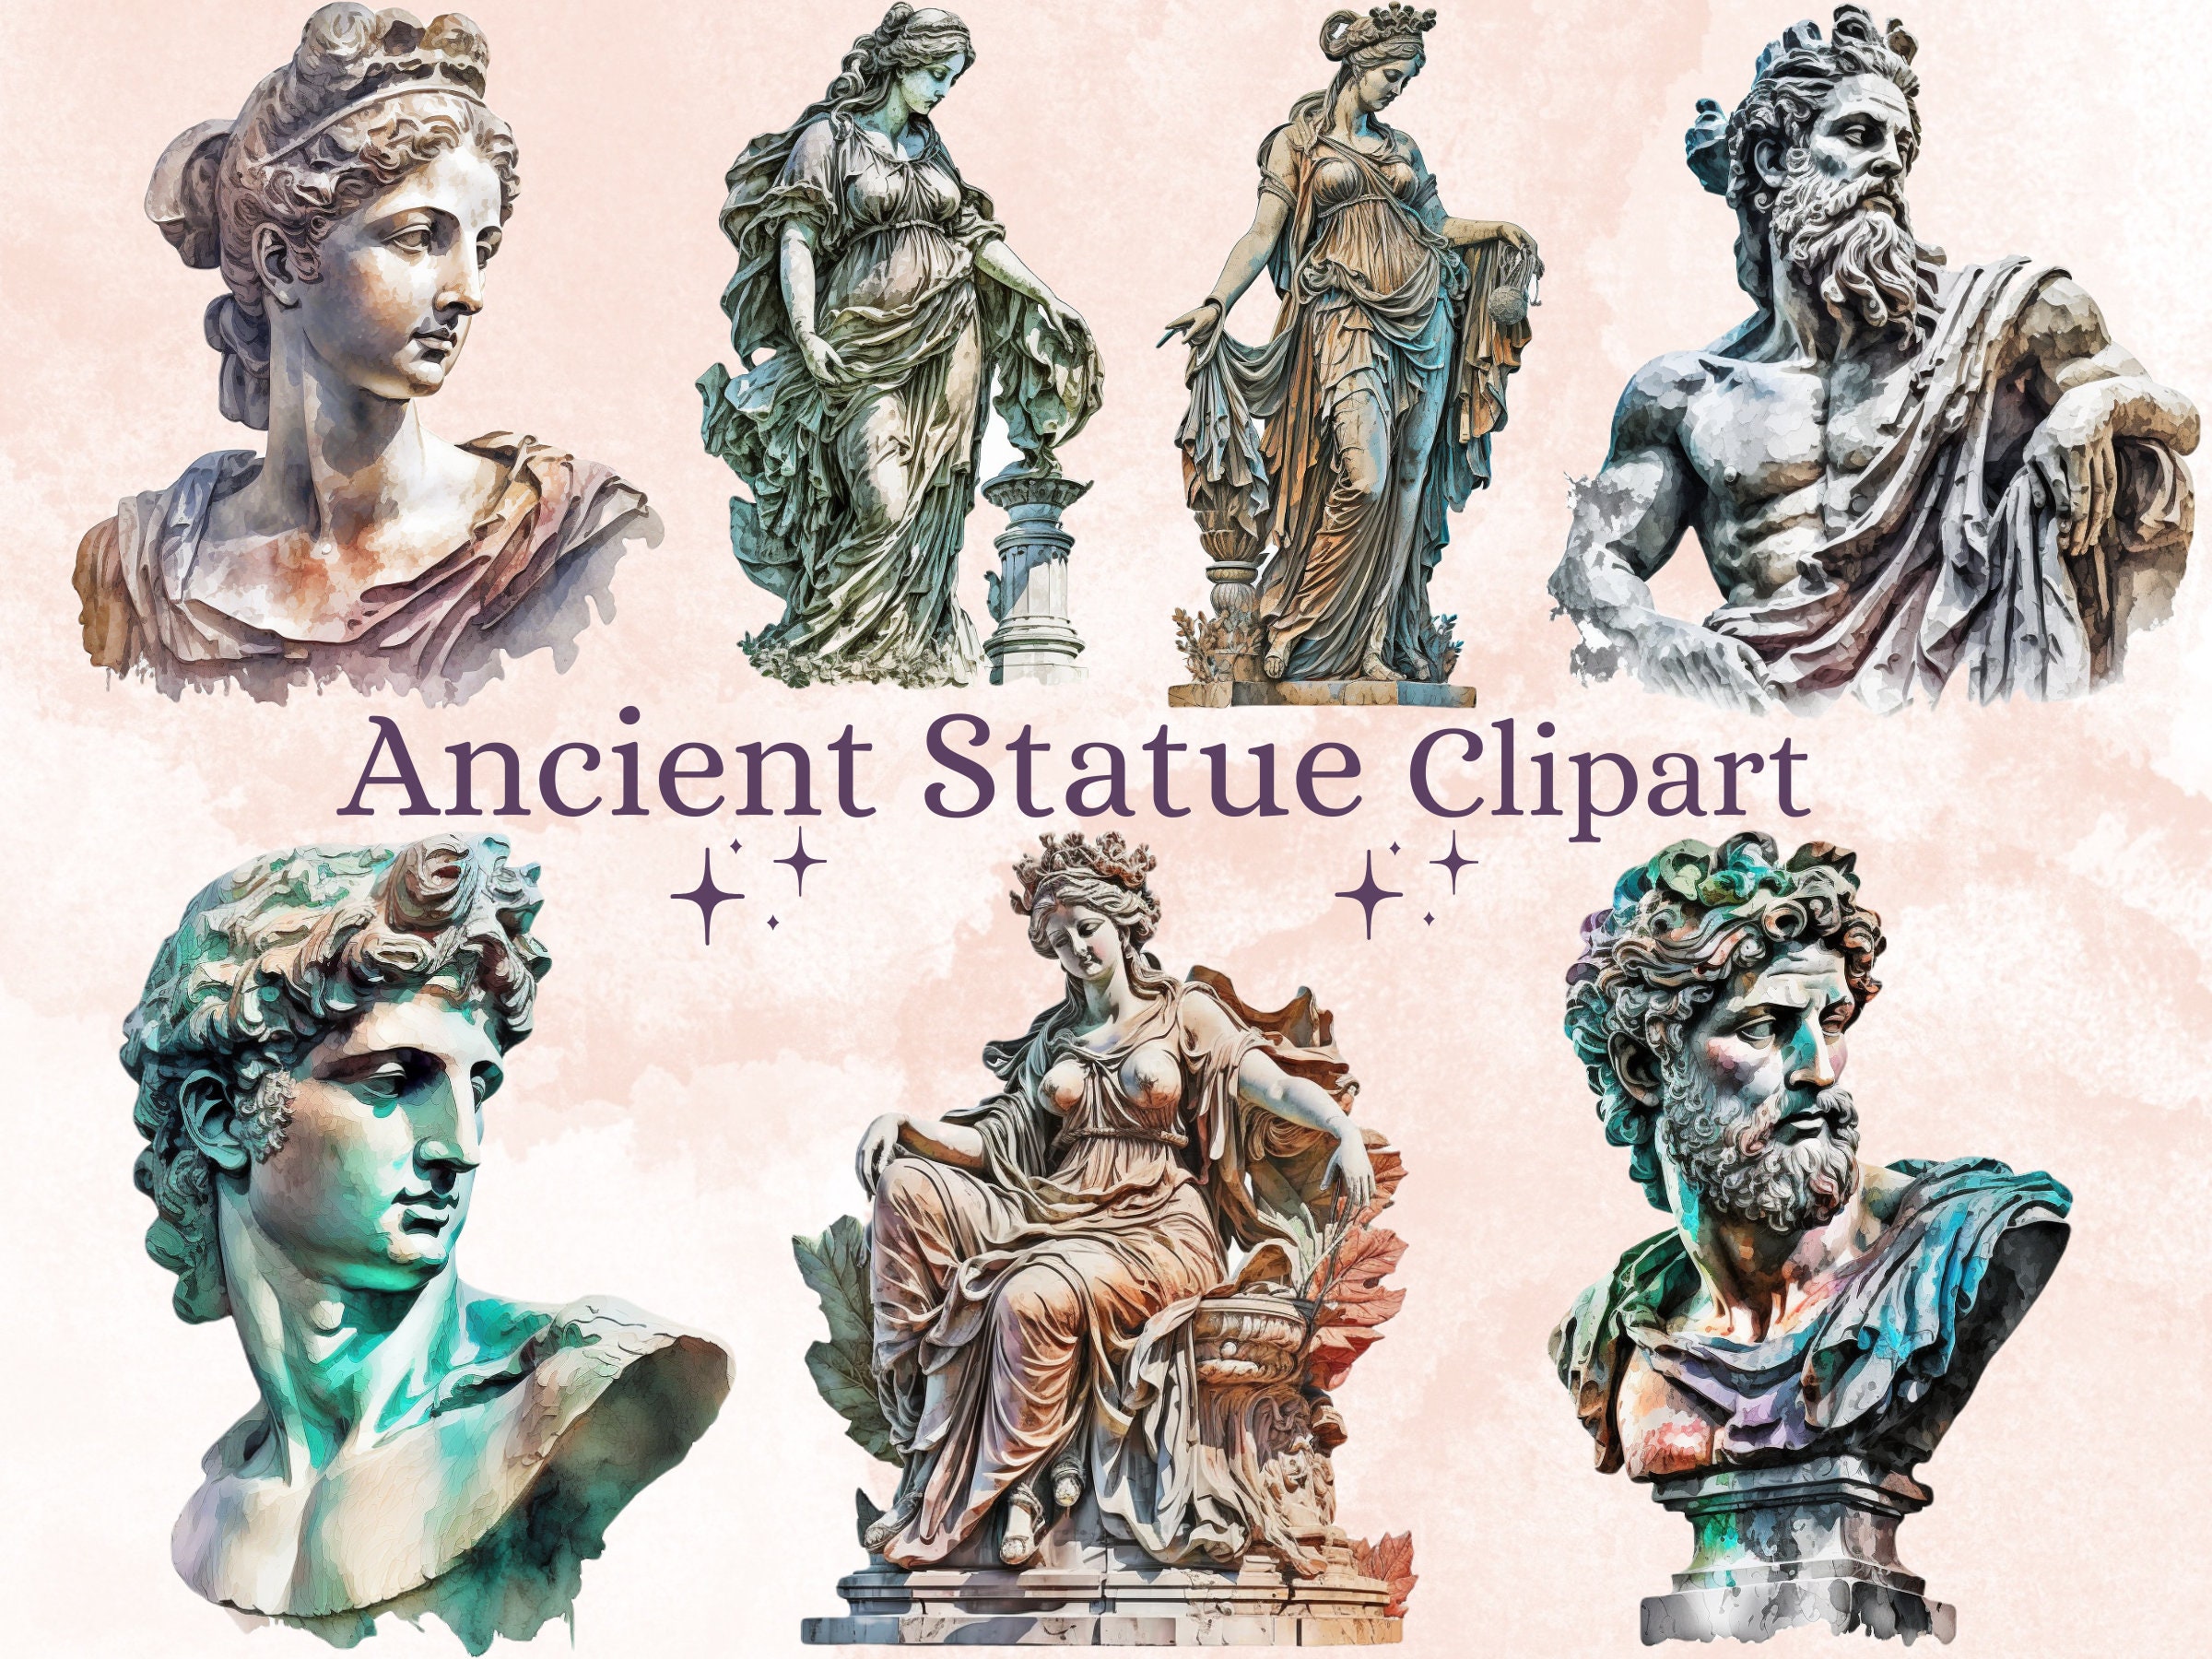 Moai Statue clipart. Free download transparent .PNG